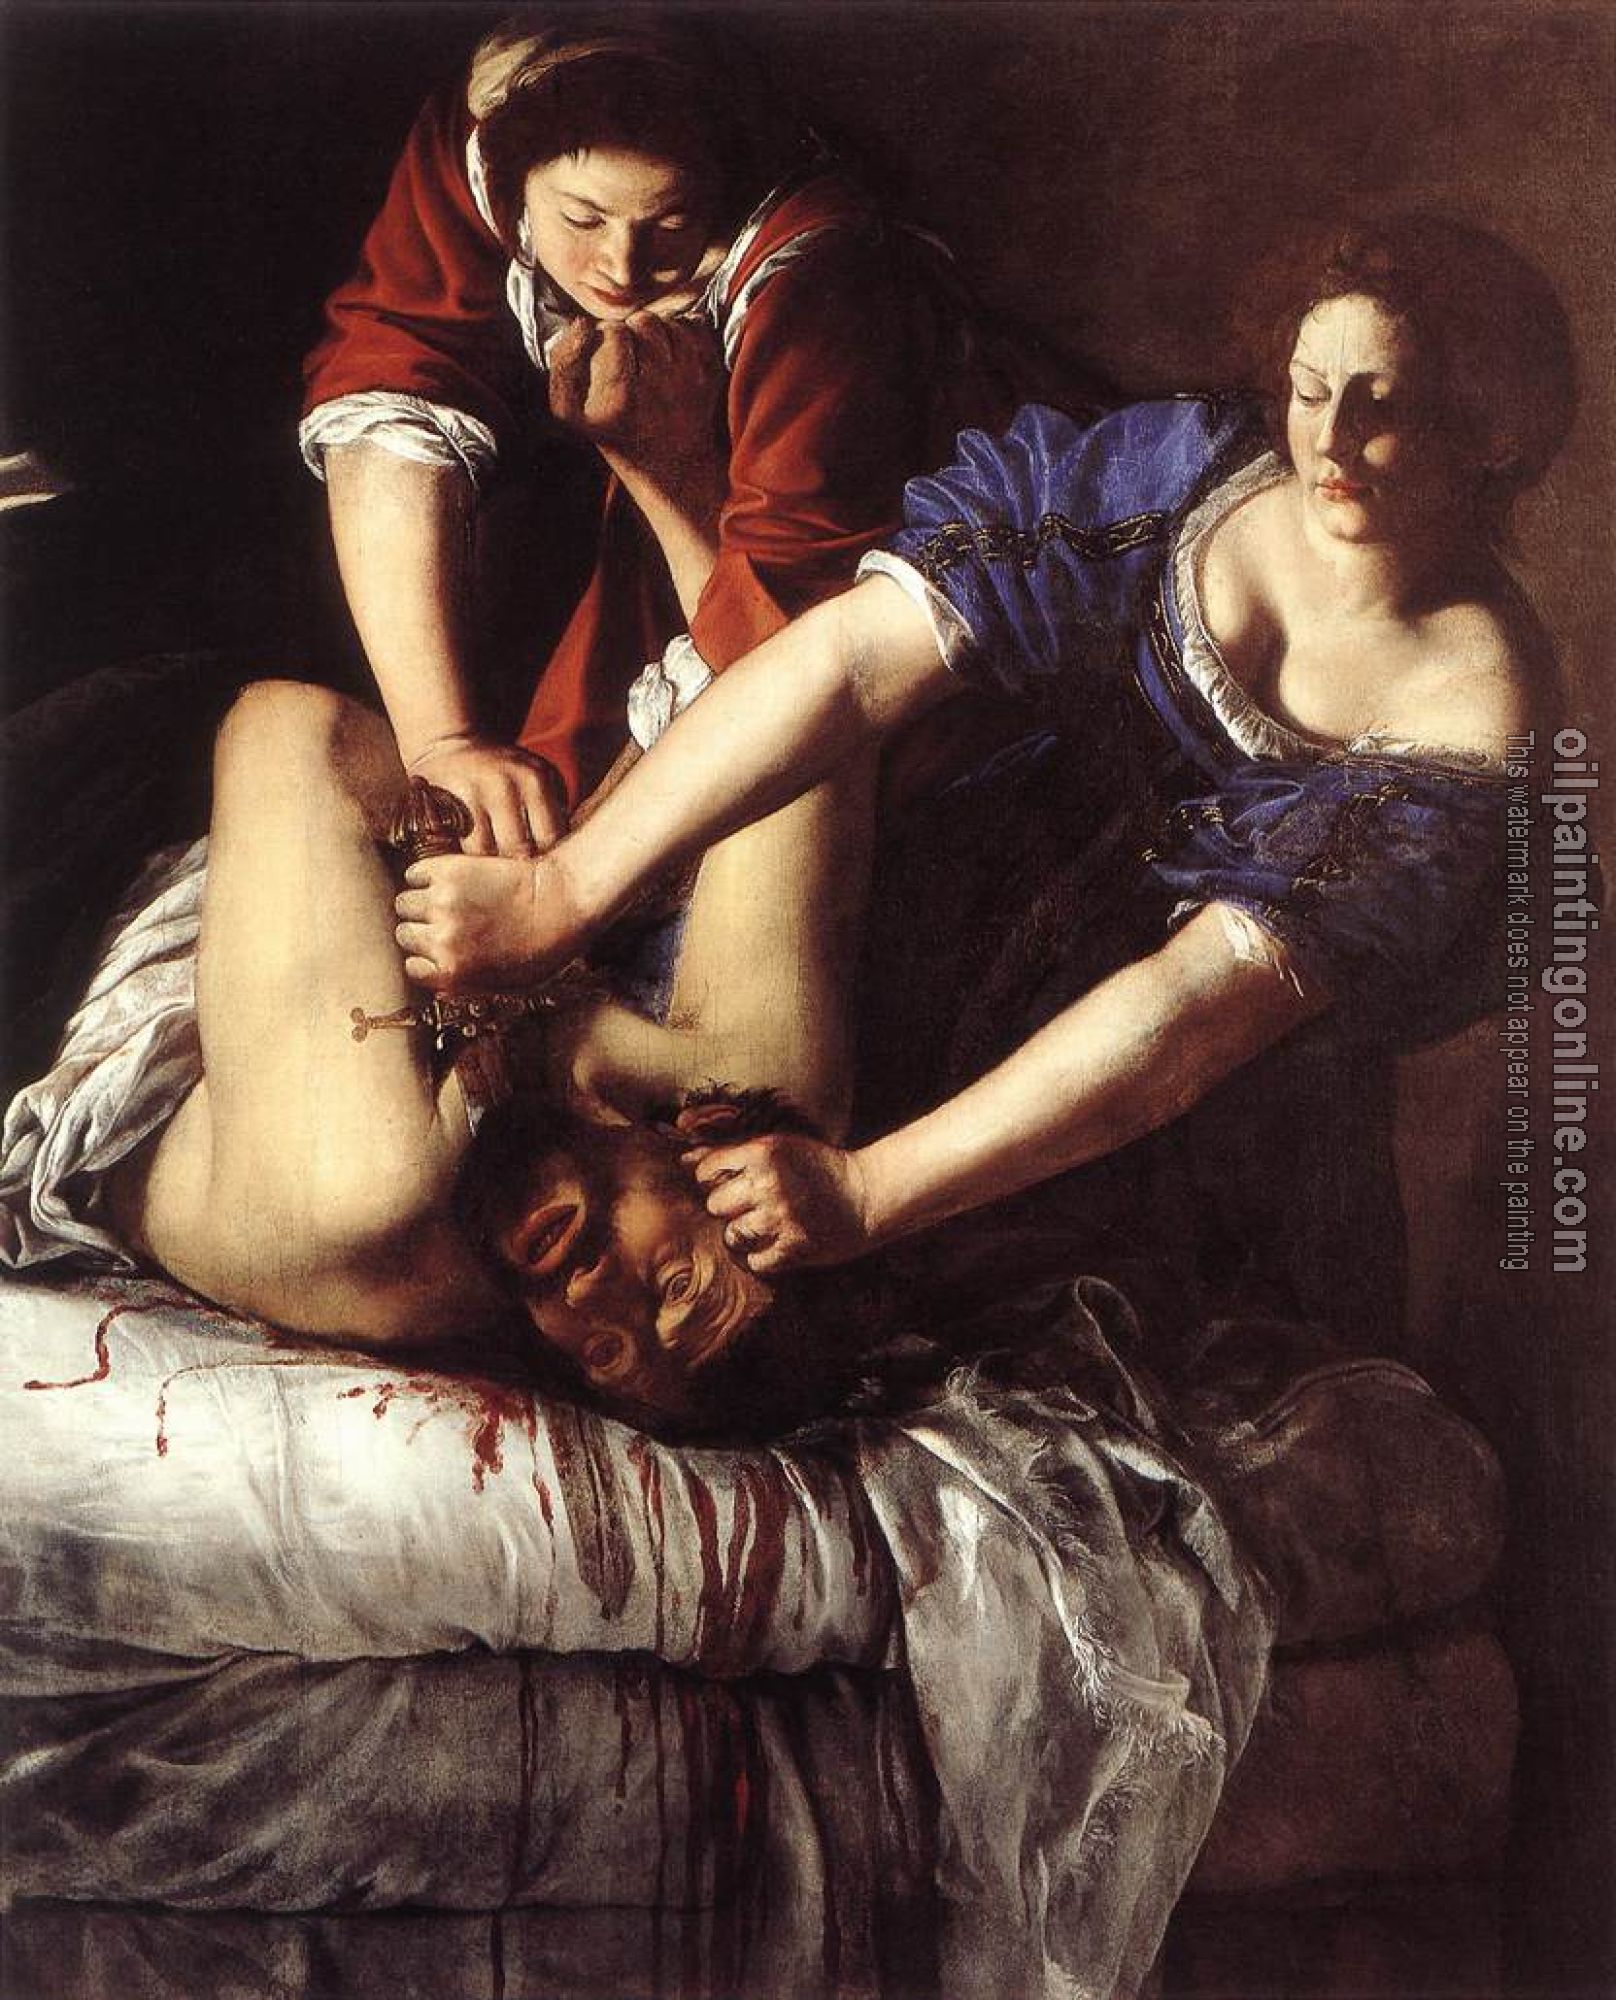 Gentileschi, Artemisia - Judith Beheading Holofernes